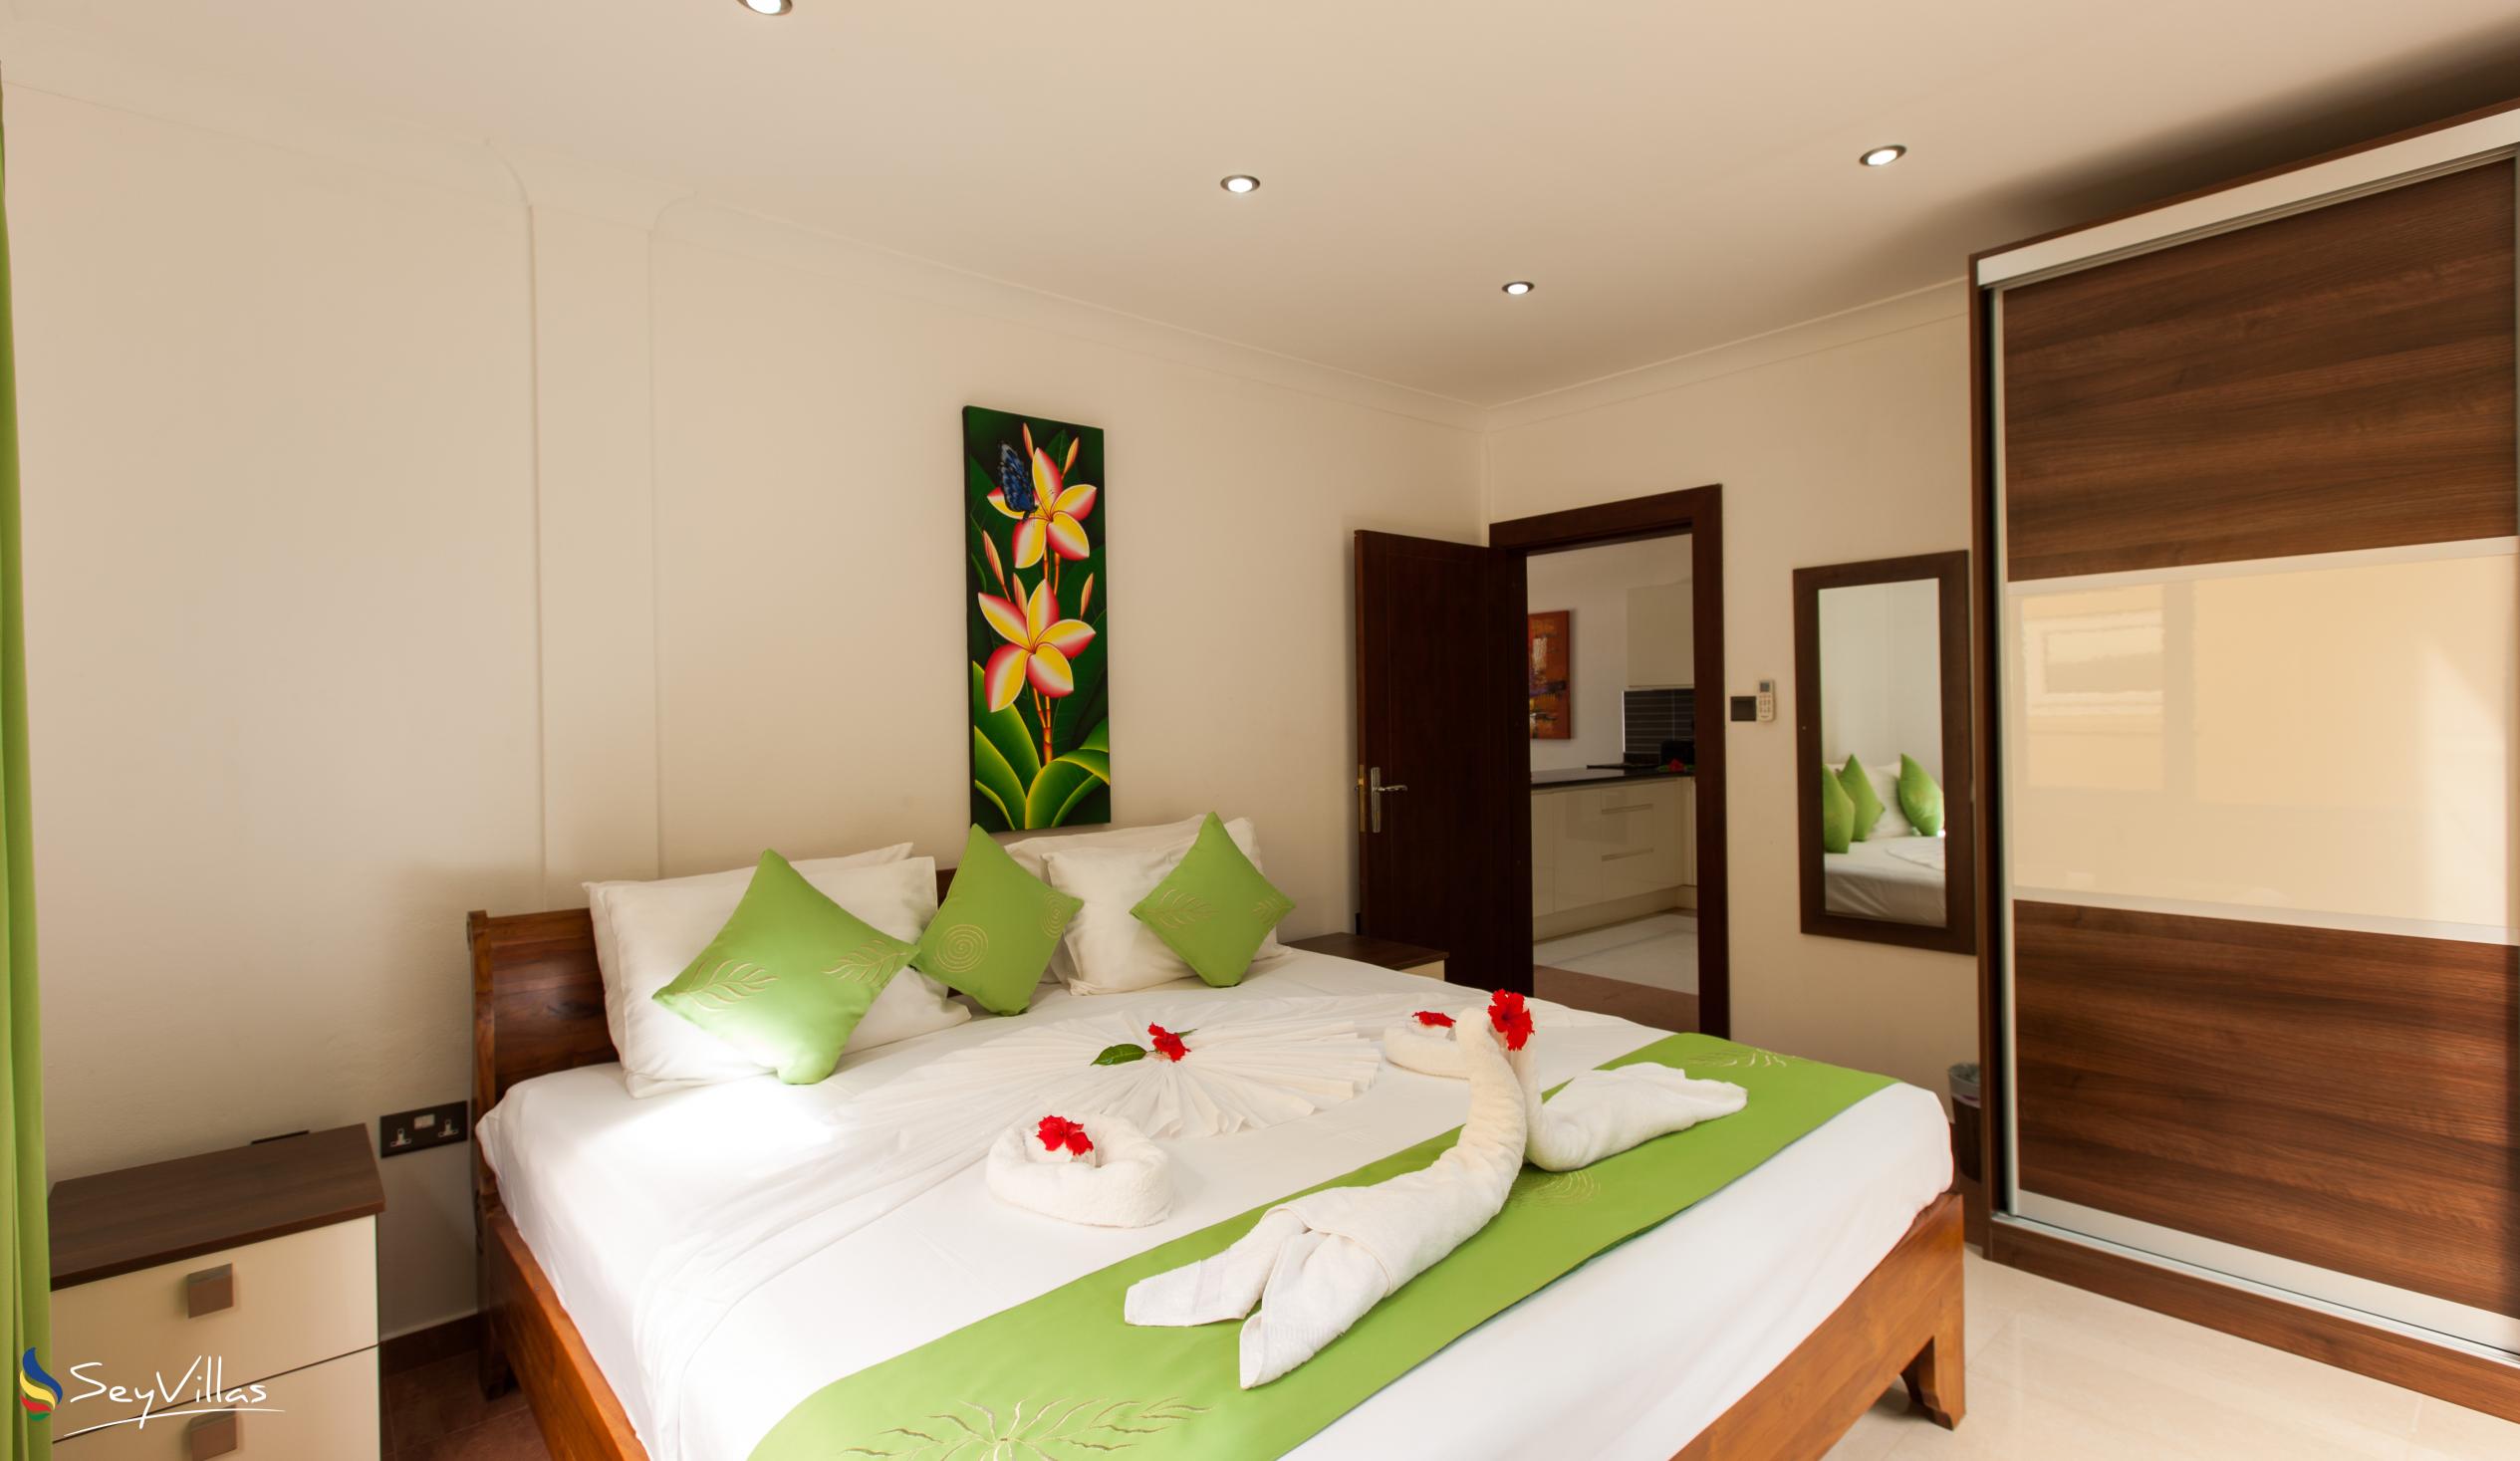 Photo 53: YASAD Luxury Beach Residence - 2-Bedroom Apartment - Praslin (Seychelles)